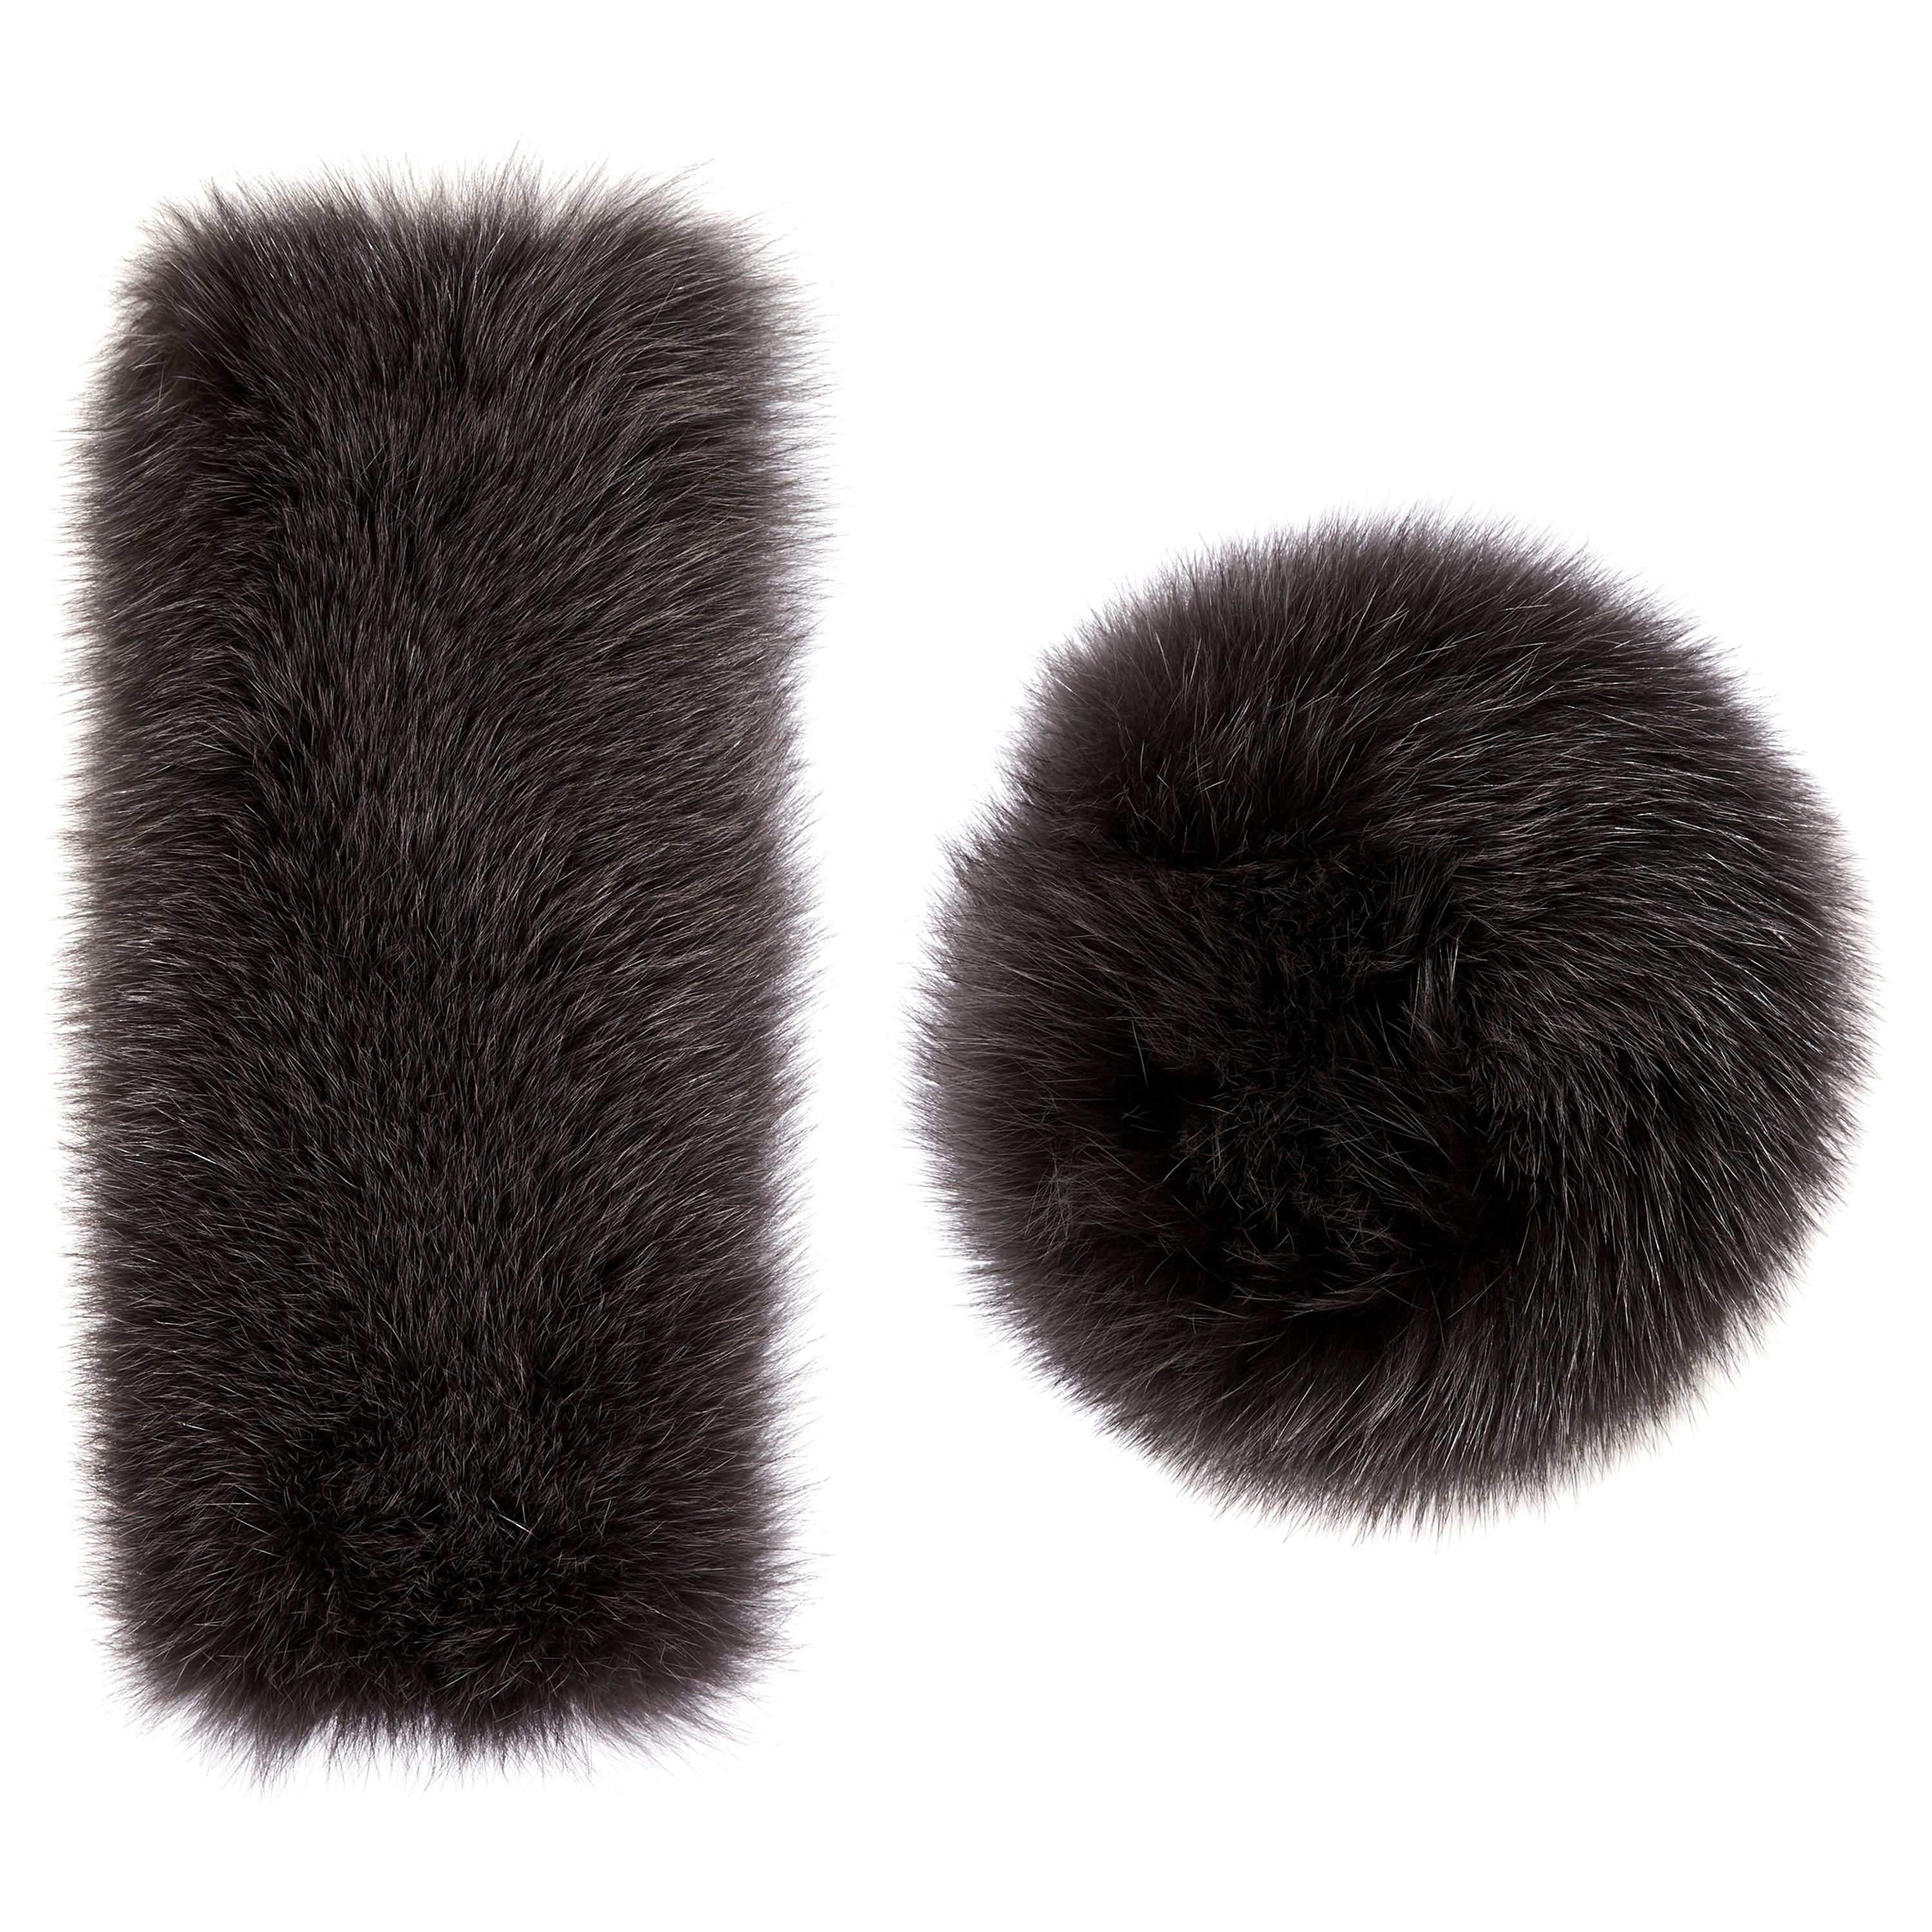 Verheyen London Large Snap on Fox Fur Cuffs in Dark Grey - New 